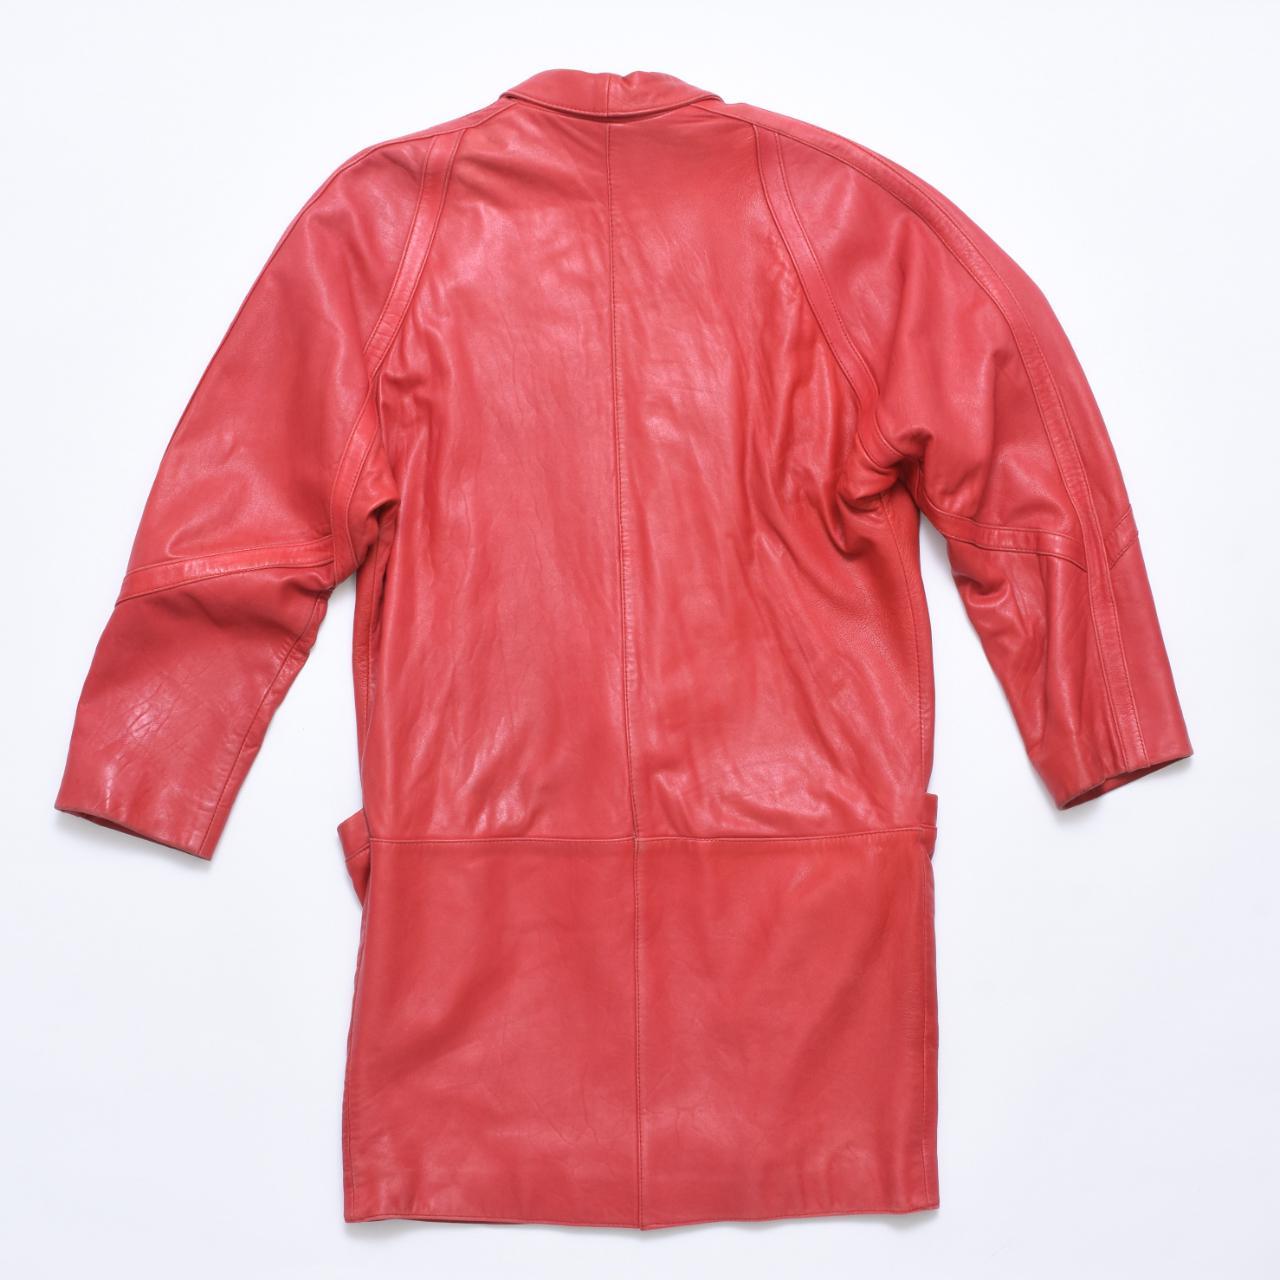 Women's Red Jacket (3)